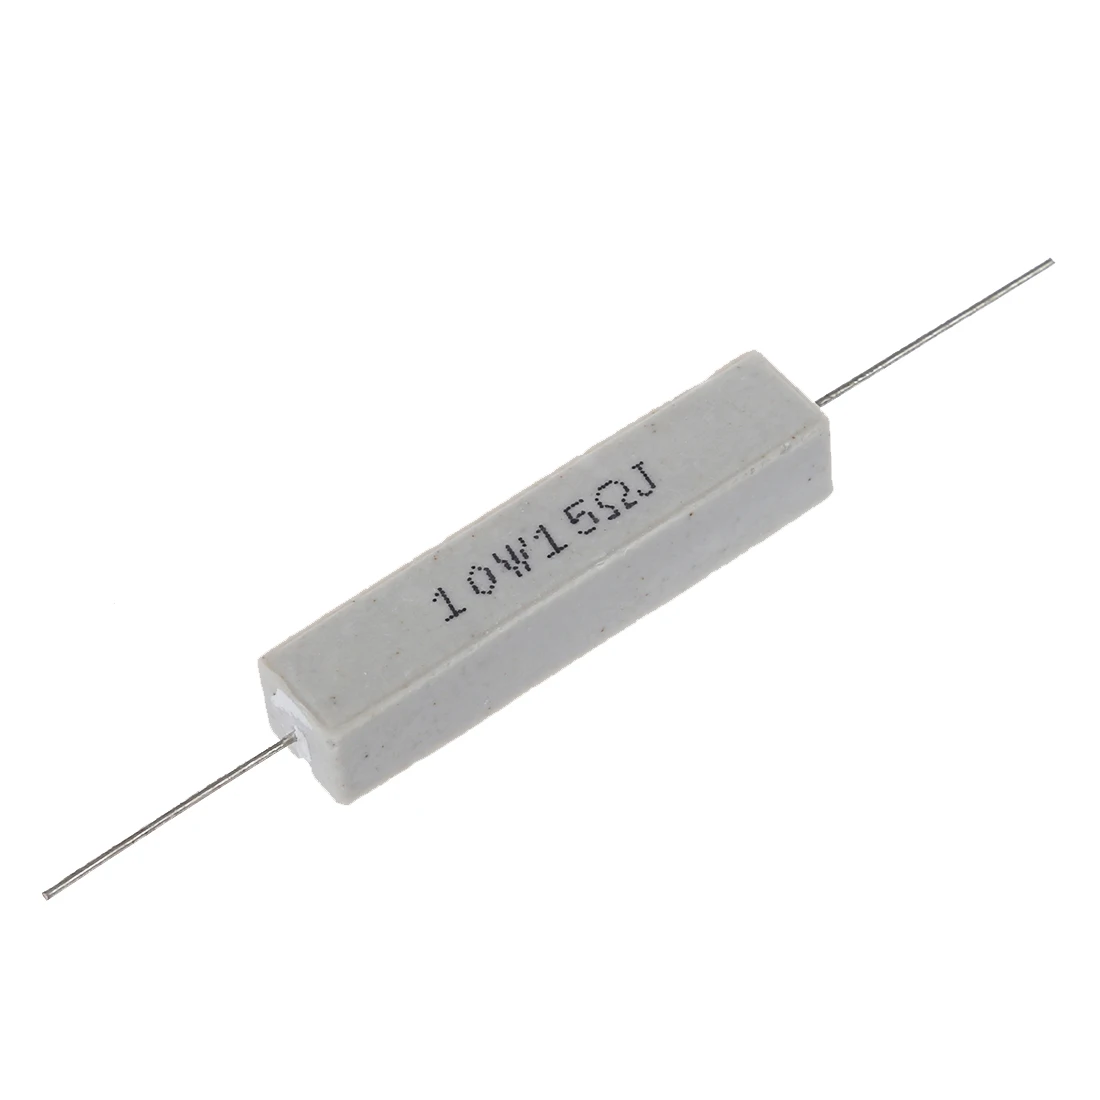 

5 Pcs 10W Watt 15 ohm 5% Wirewound Ceramic Cement Resistor